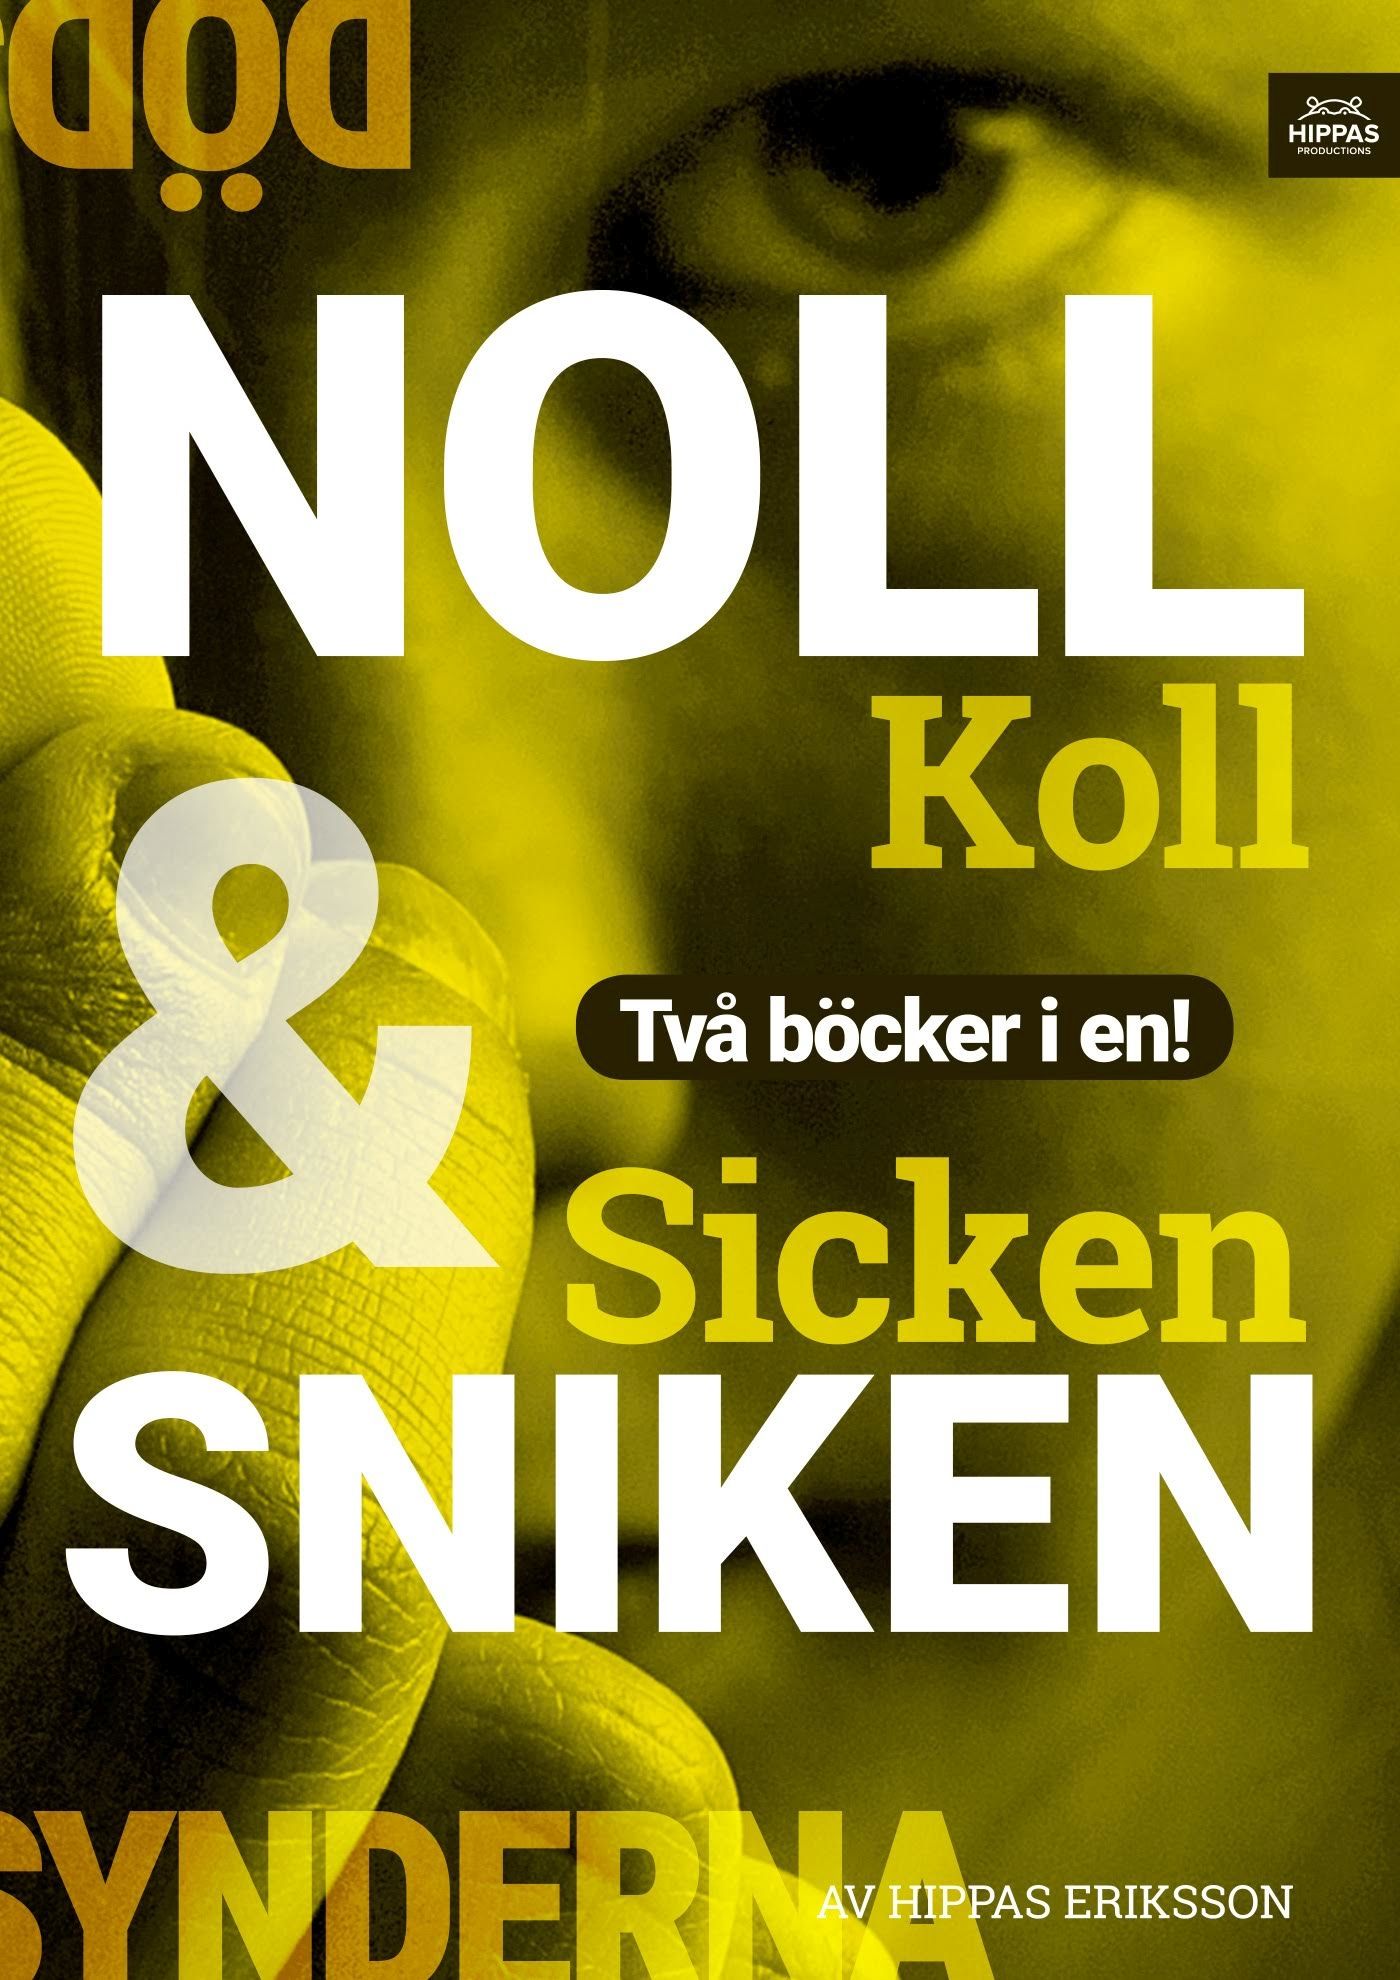 Noll koll / Sicken sniken, e-bok av Hippas Eriksson